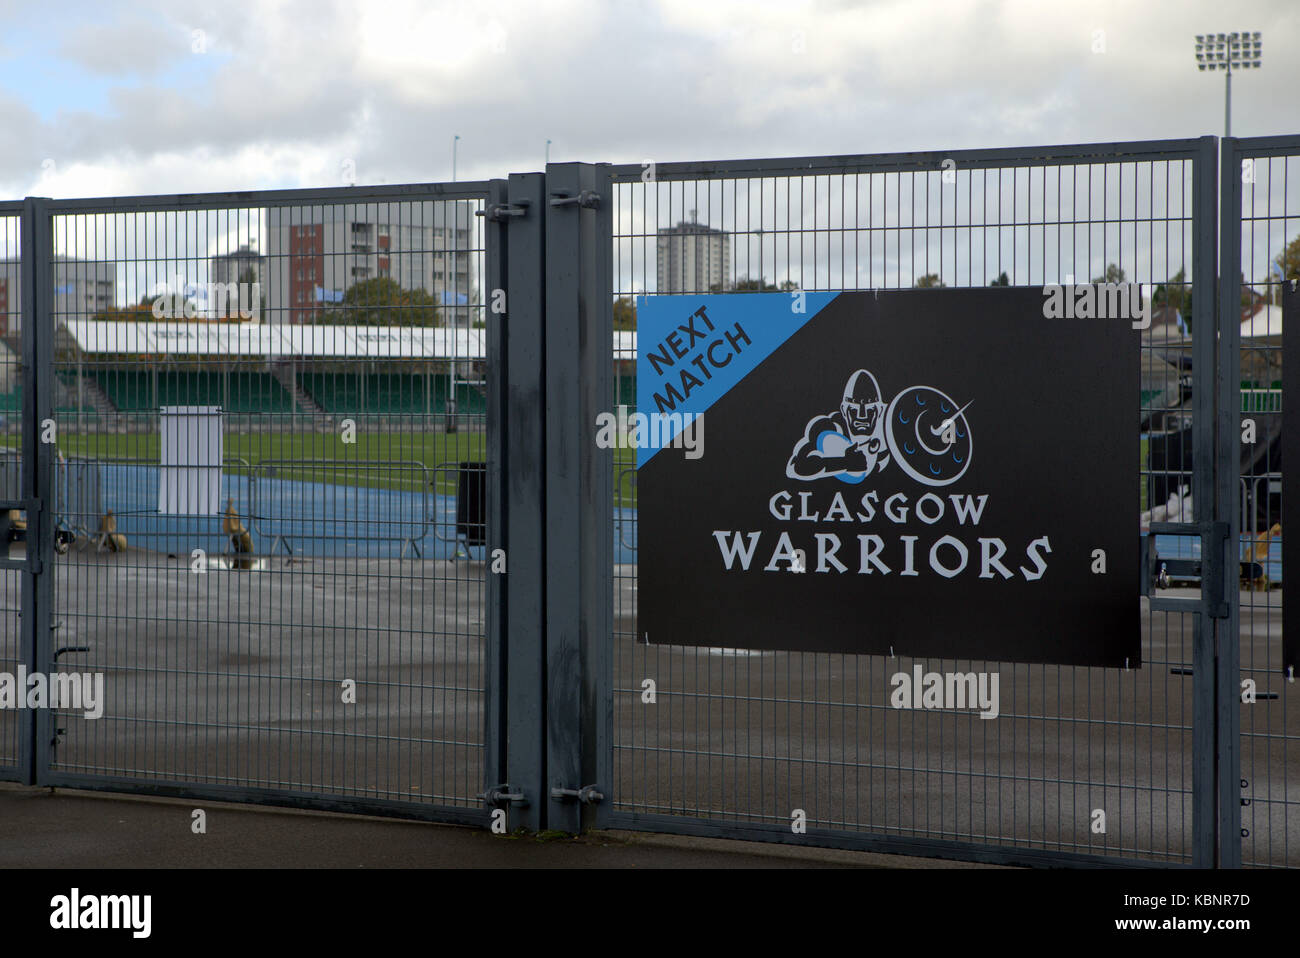 Glasgow Warriors rugby club Scotstoun stadium Stock Photo